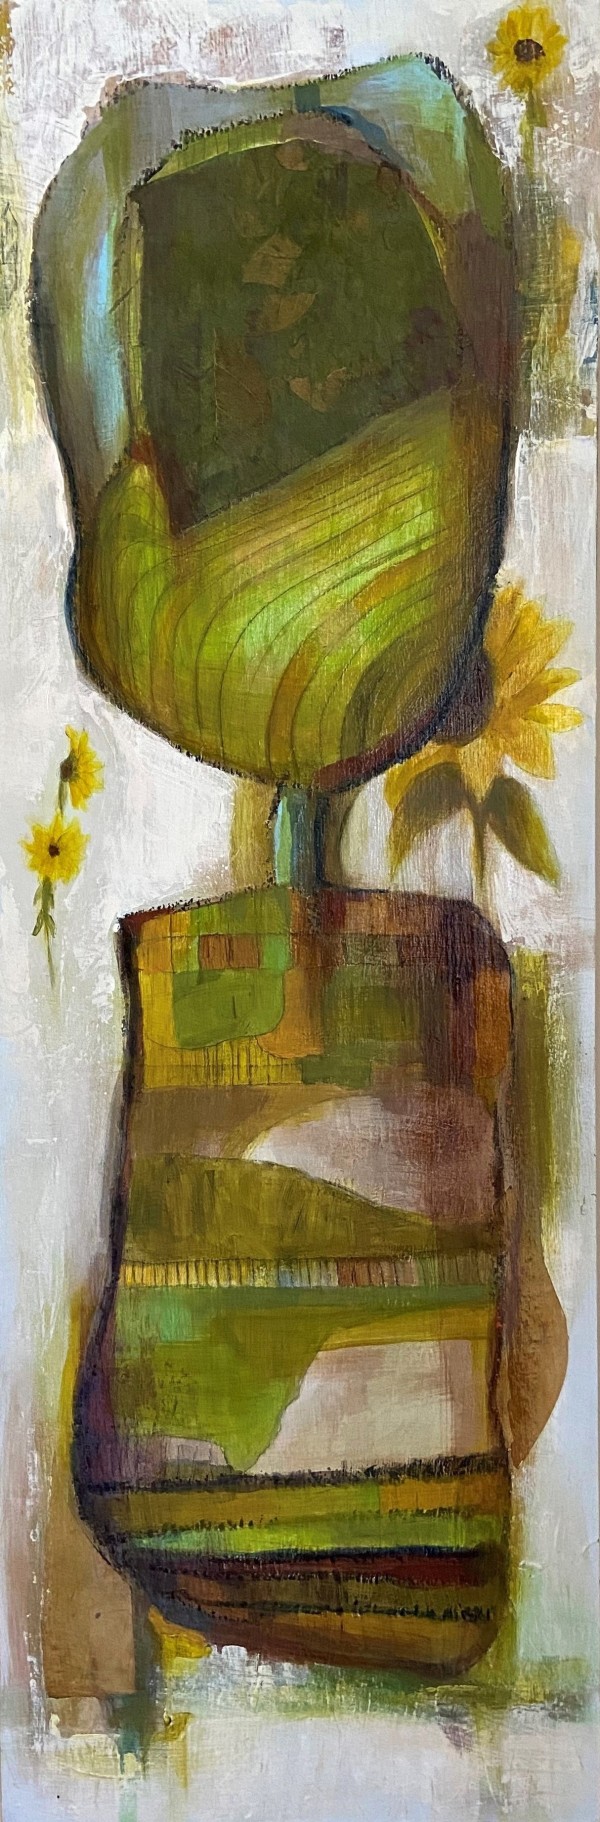 Sunflower Season by Heather Duris